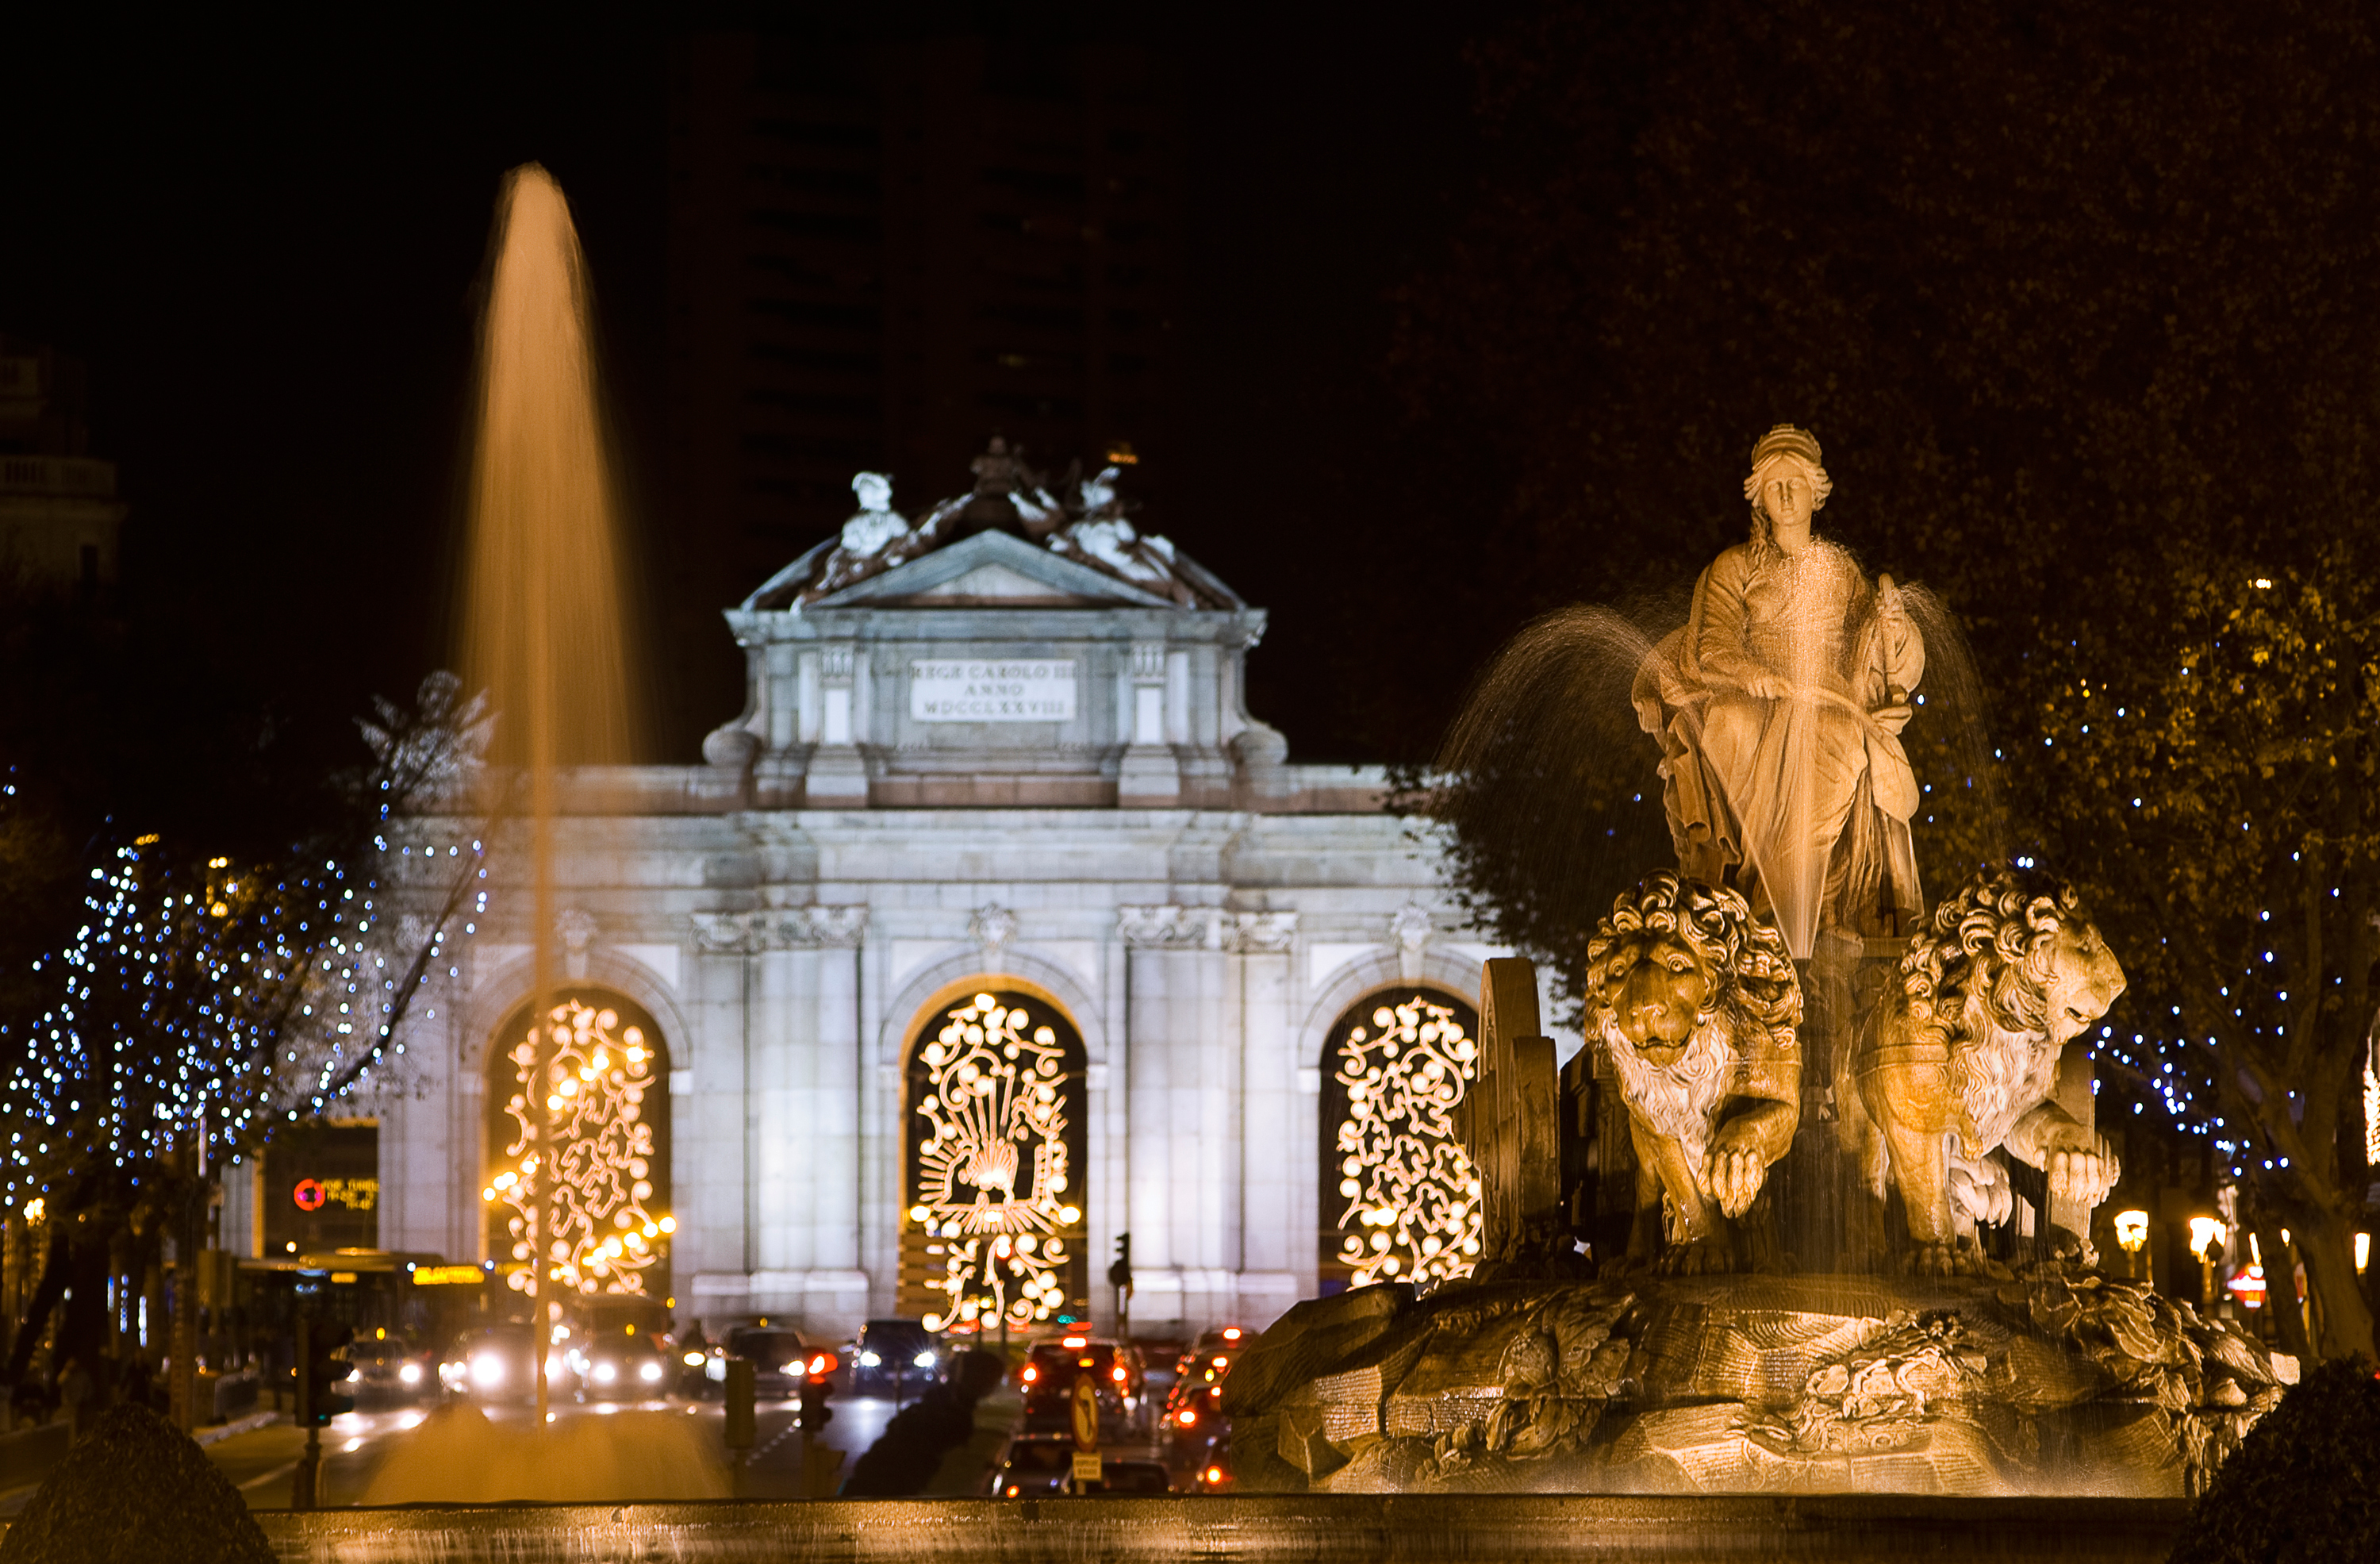 La estatua de la Cibeles y la Puerta de Alcal, iluminadas.